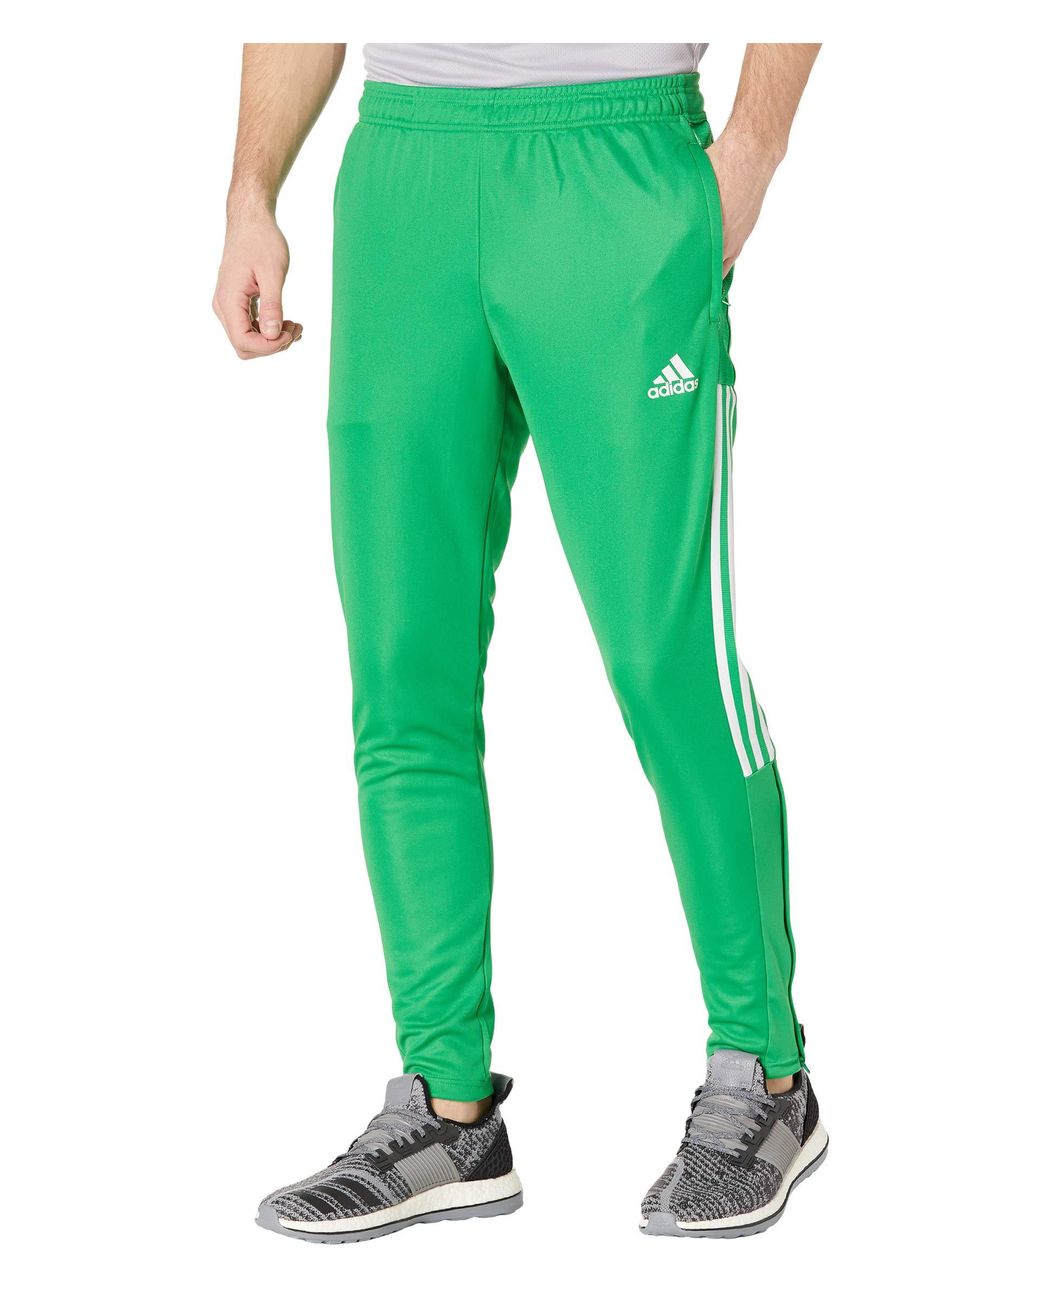 Olive Green Adidas Tiro Pants | estudioespositoymiguel.com.ar